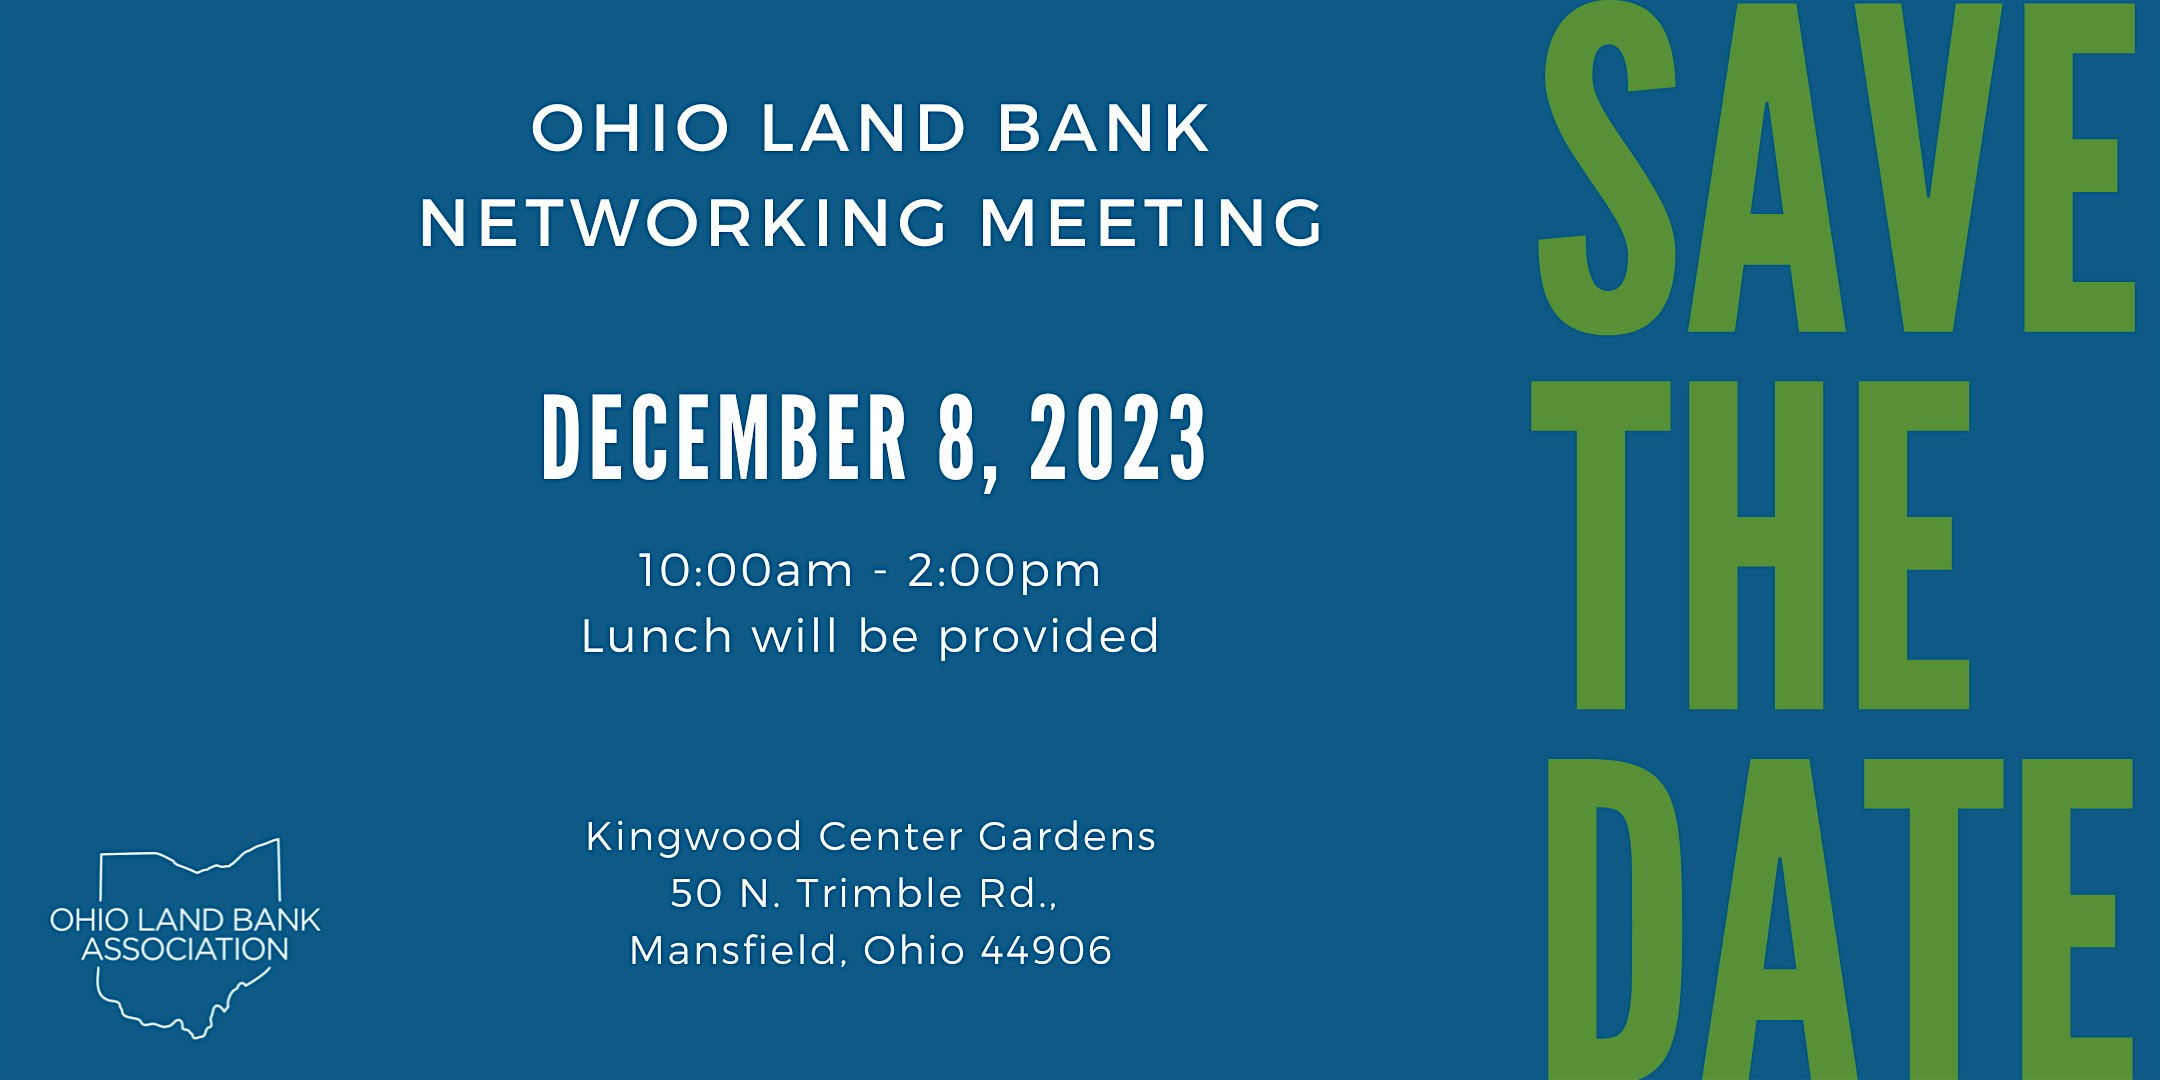 Ohio Land Bank Association Networking Meeting